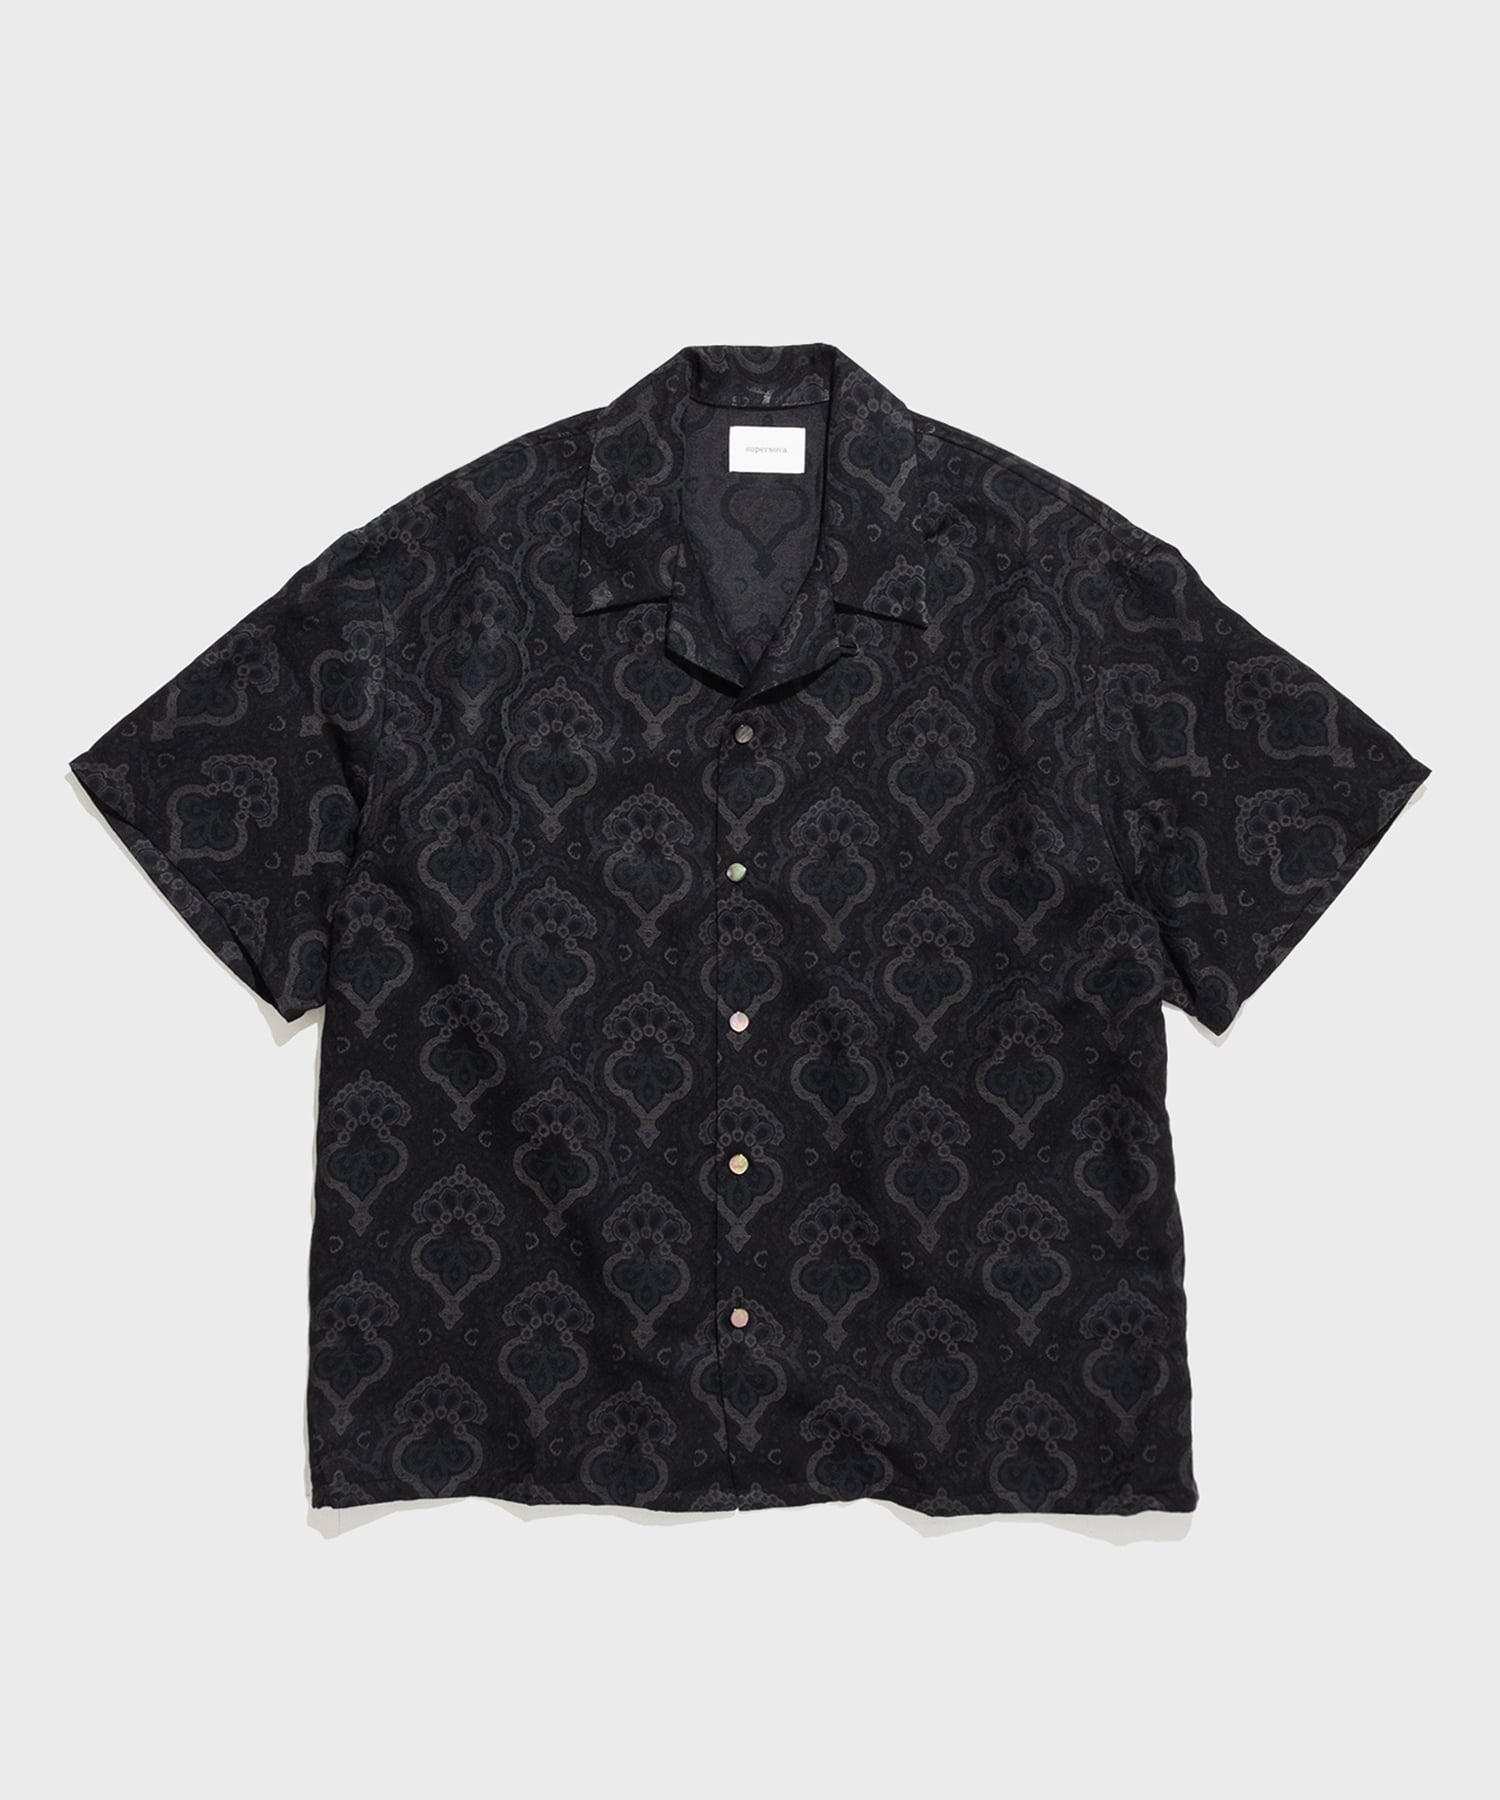 Aloha shirt-Damask jacquard